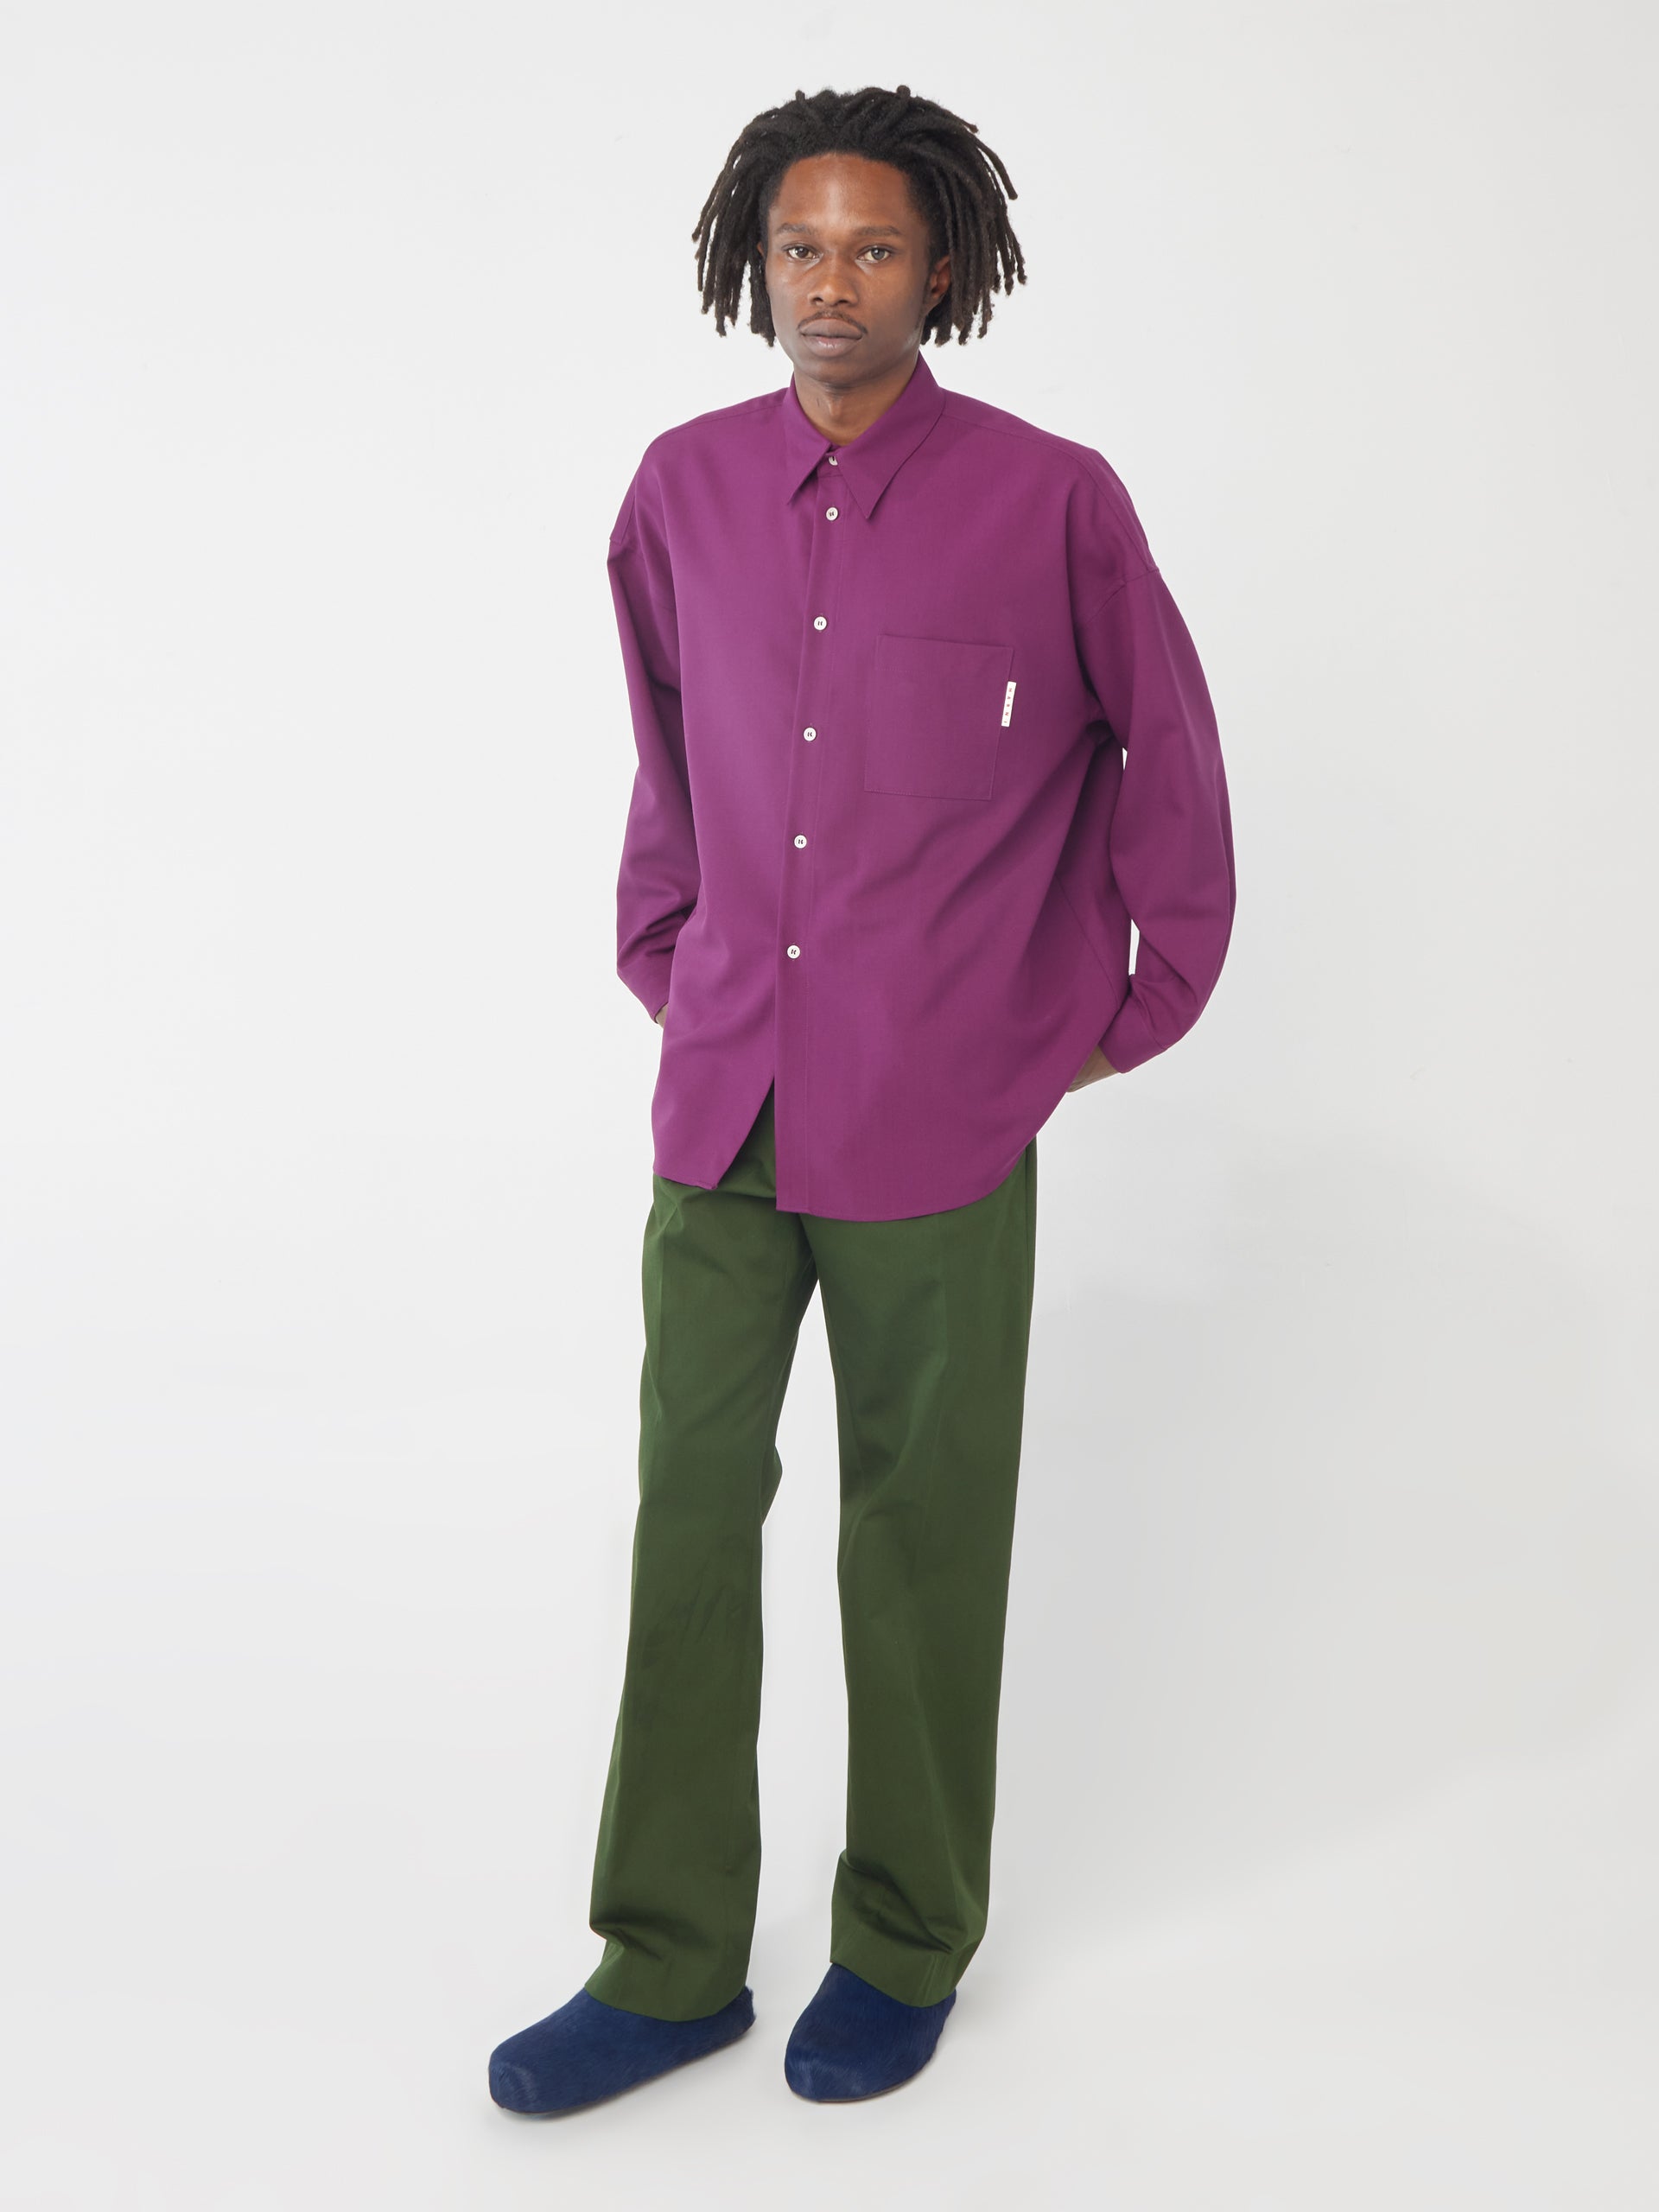 Tropical Wool Long-sleeved shirt (Dry Rose)